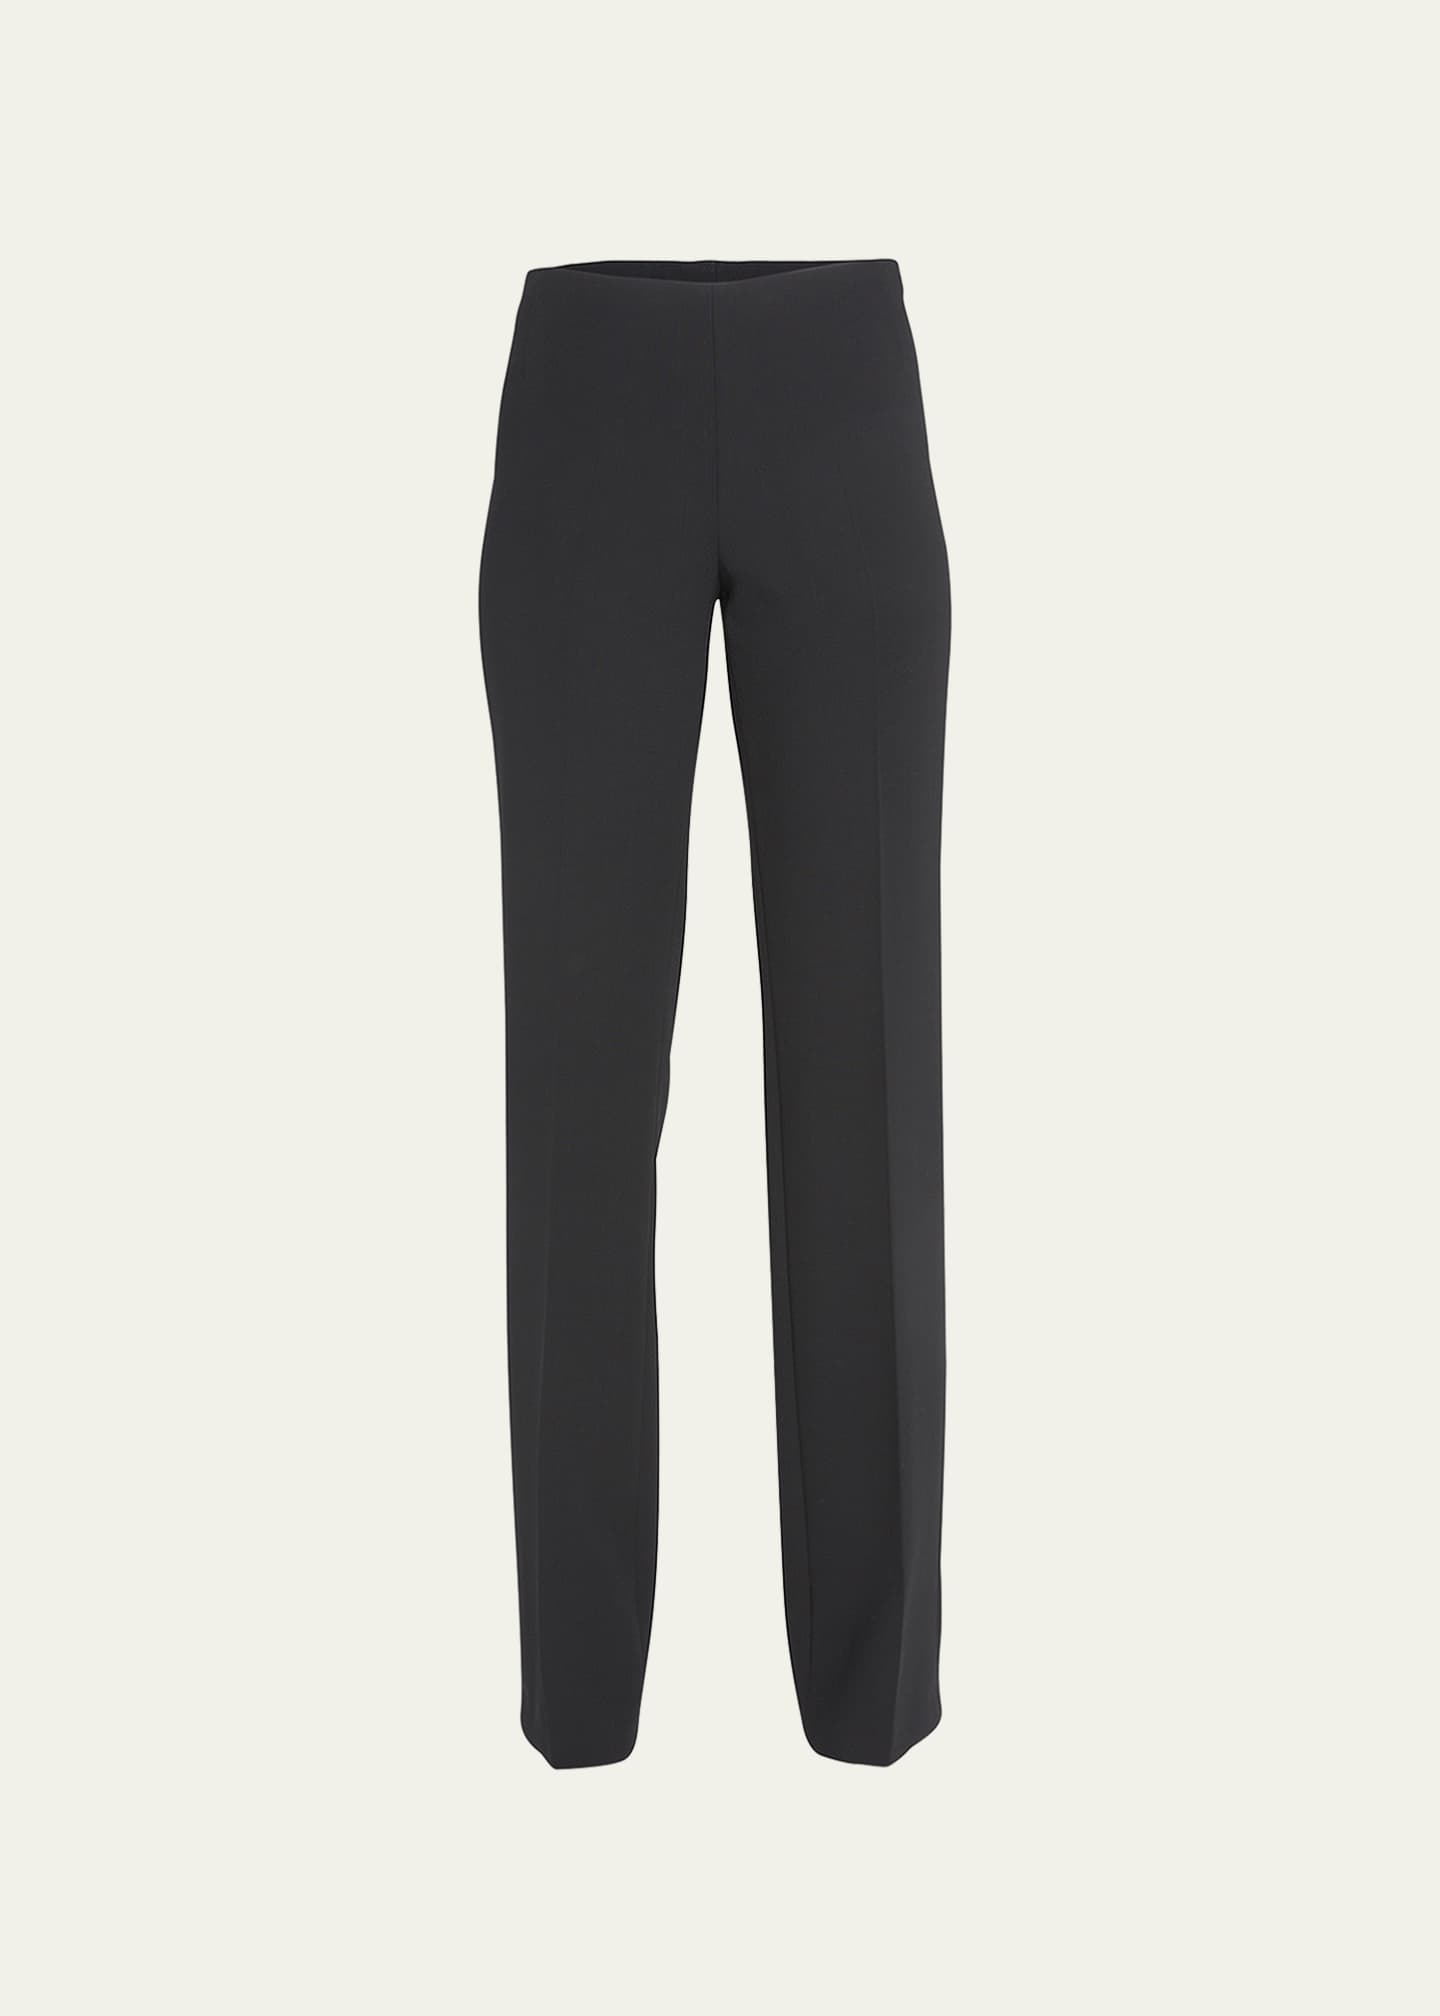 Women's Black Flat Front Pants